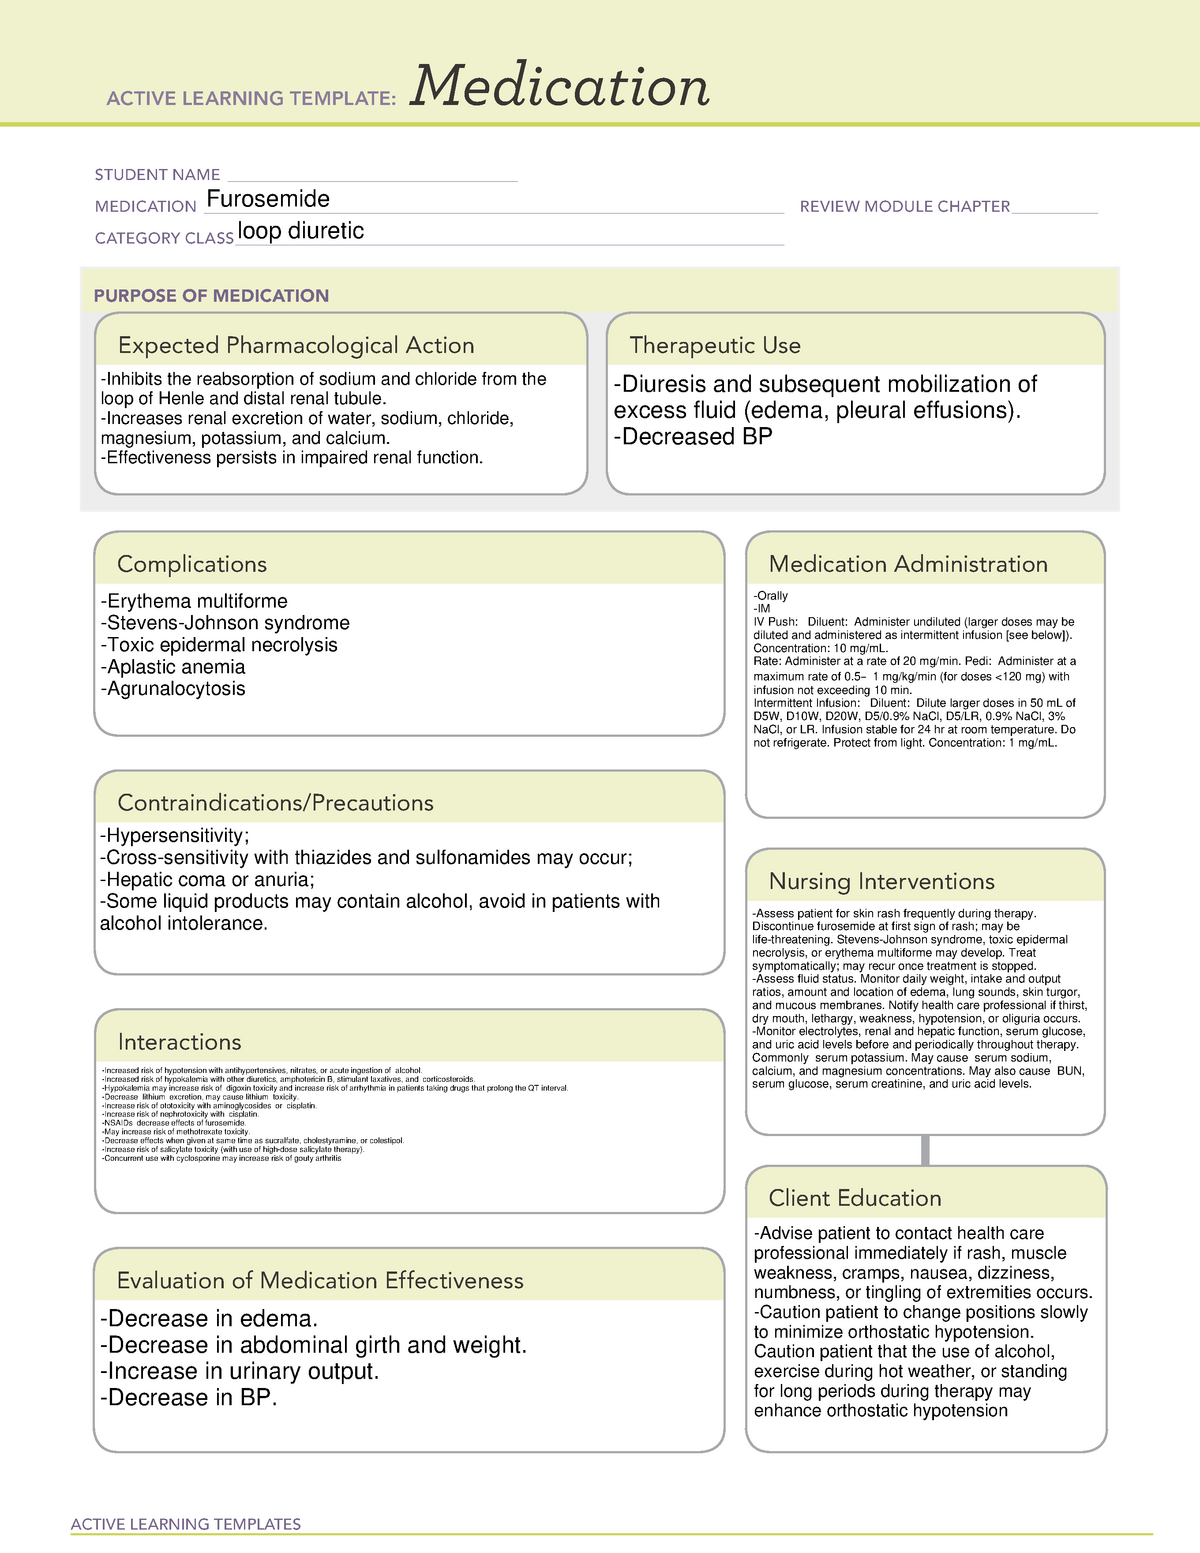 furosemide-medication-ati-active-learning-templates-medication-student-name-studocu